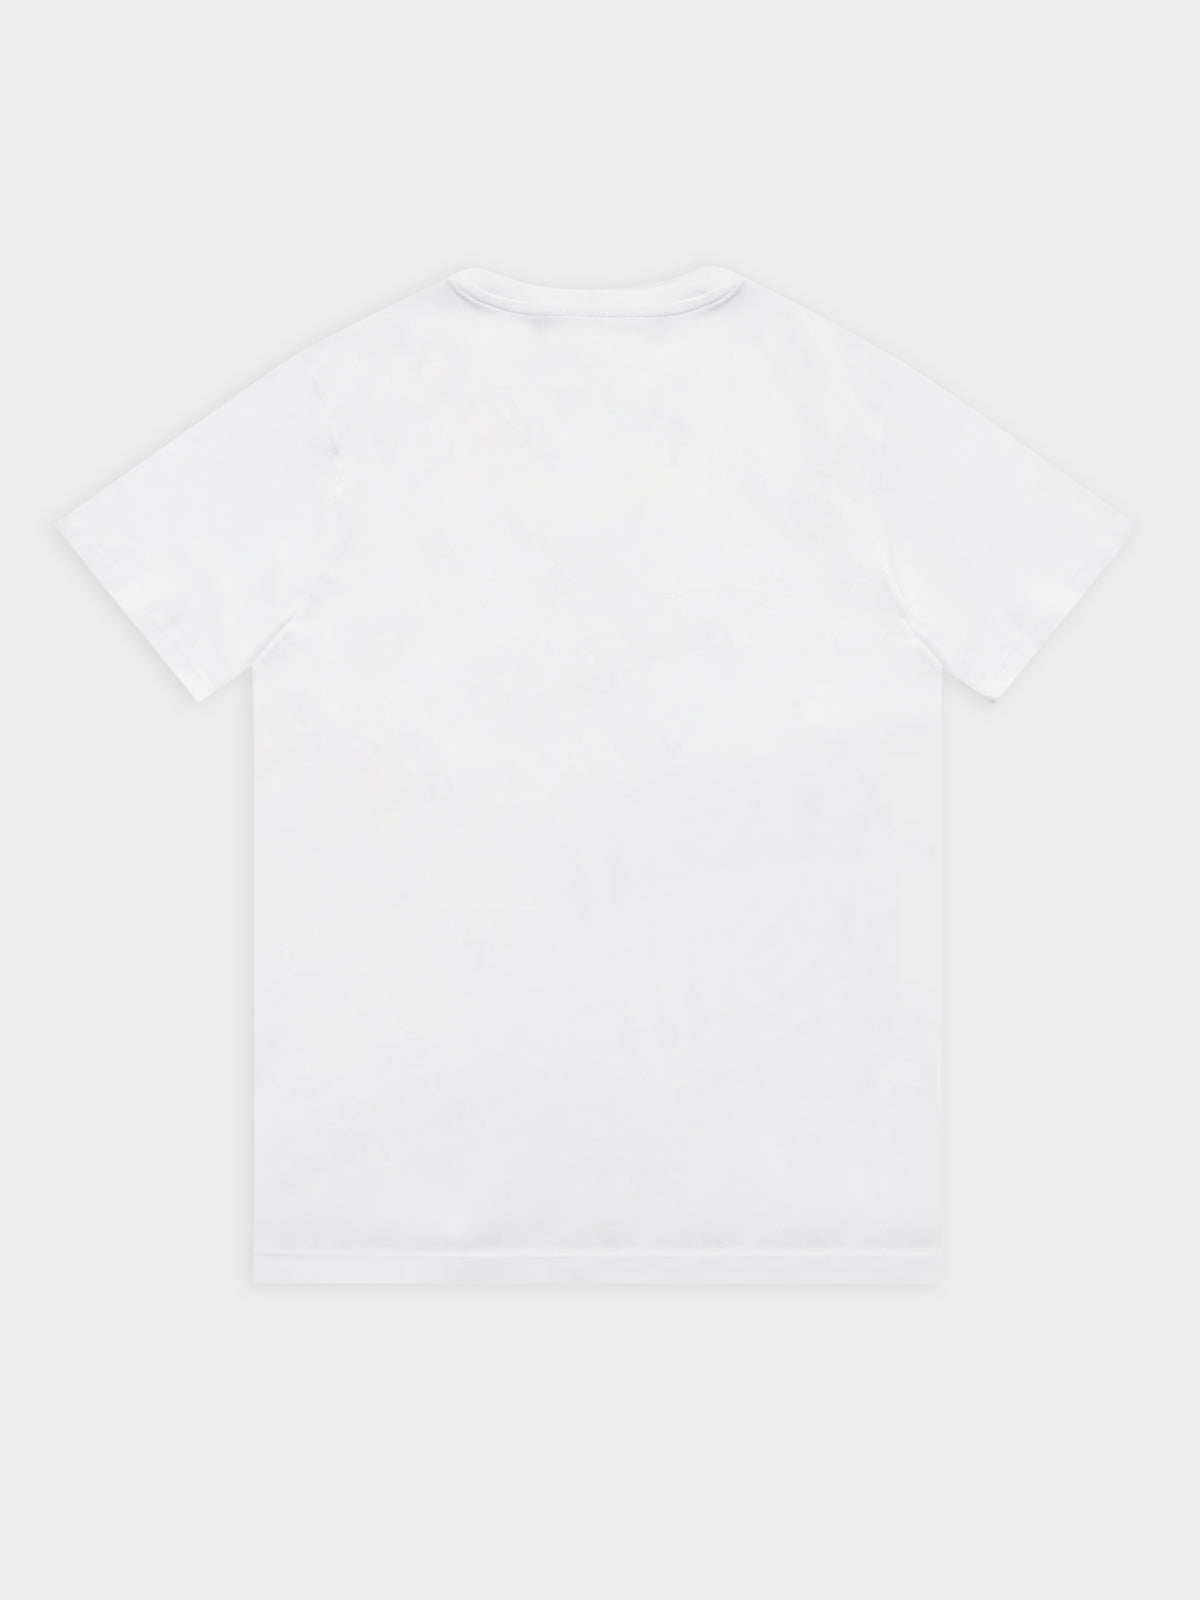 Authentic Dorian T-Shirt in White